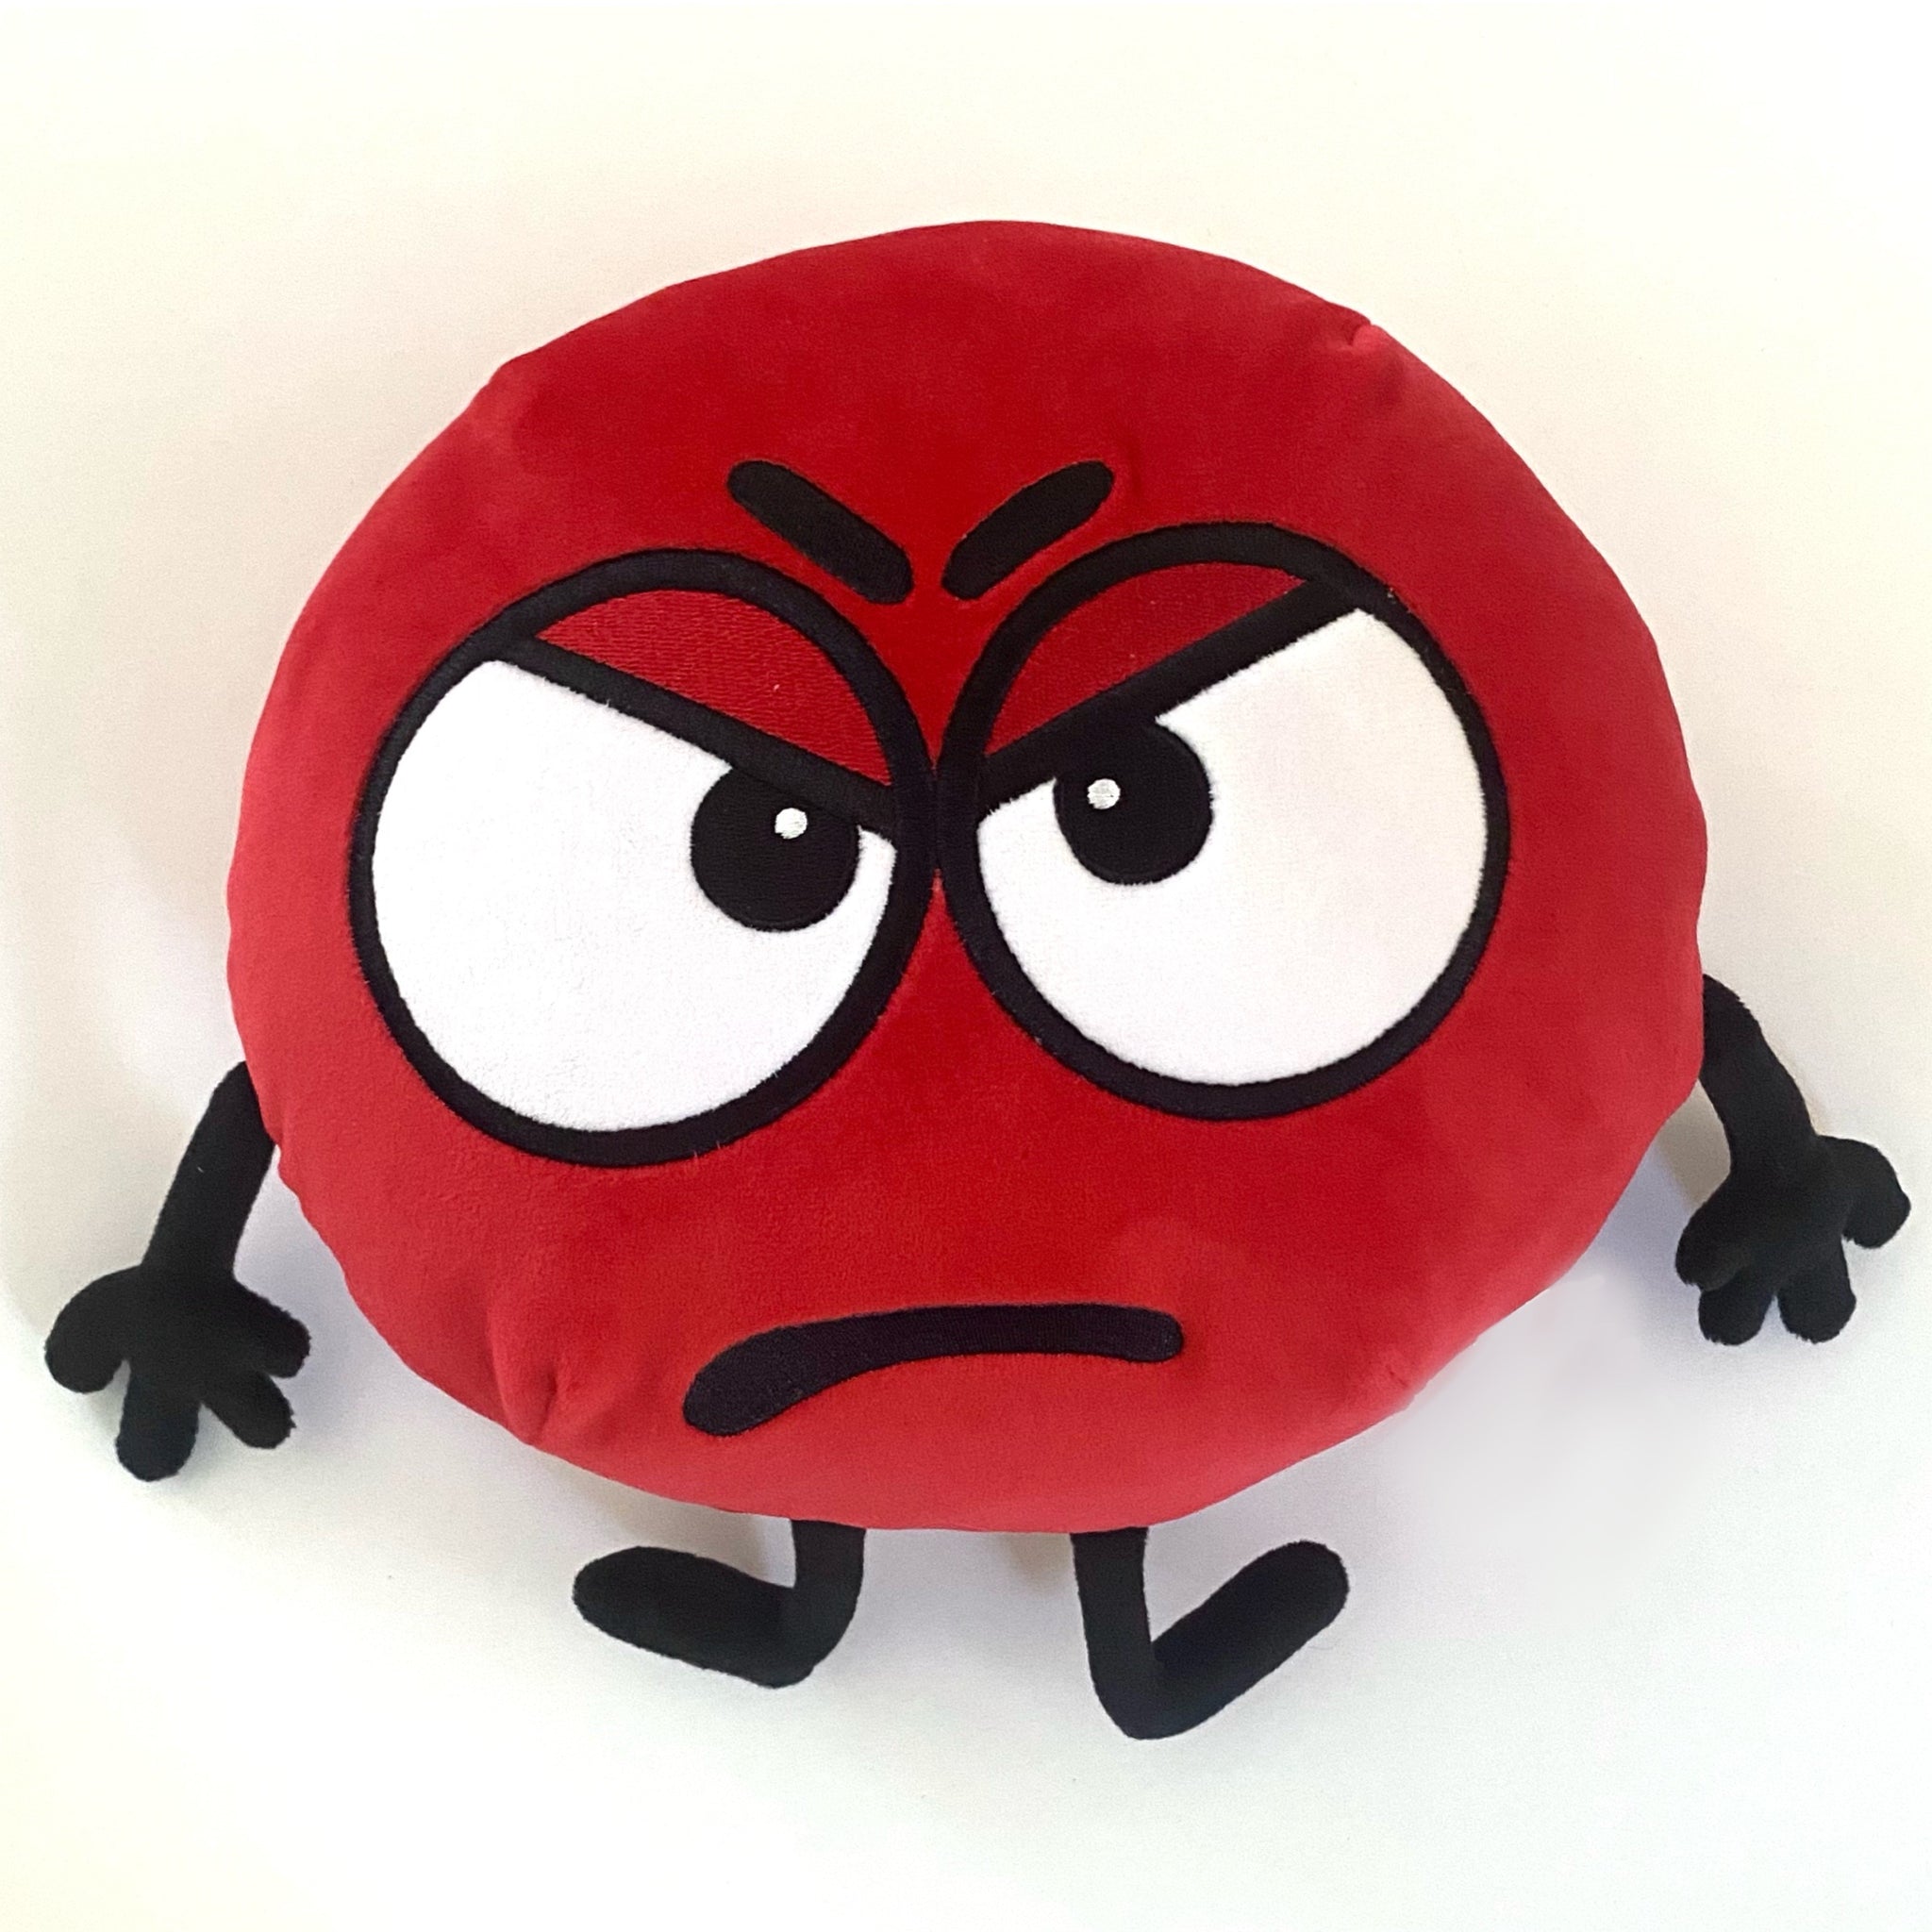 BIG RED Anger Plush